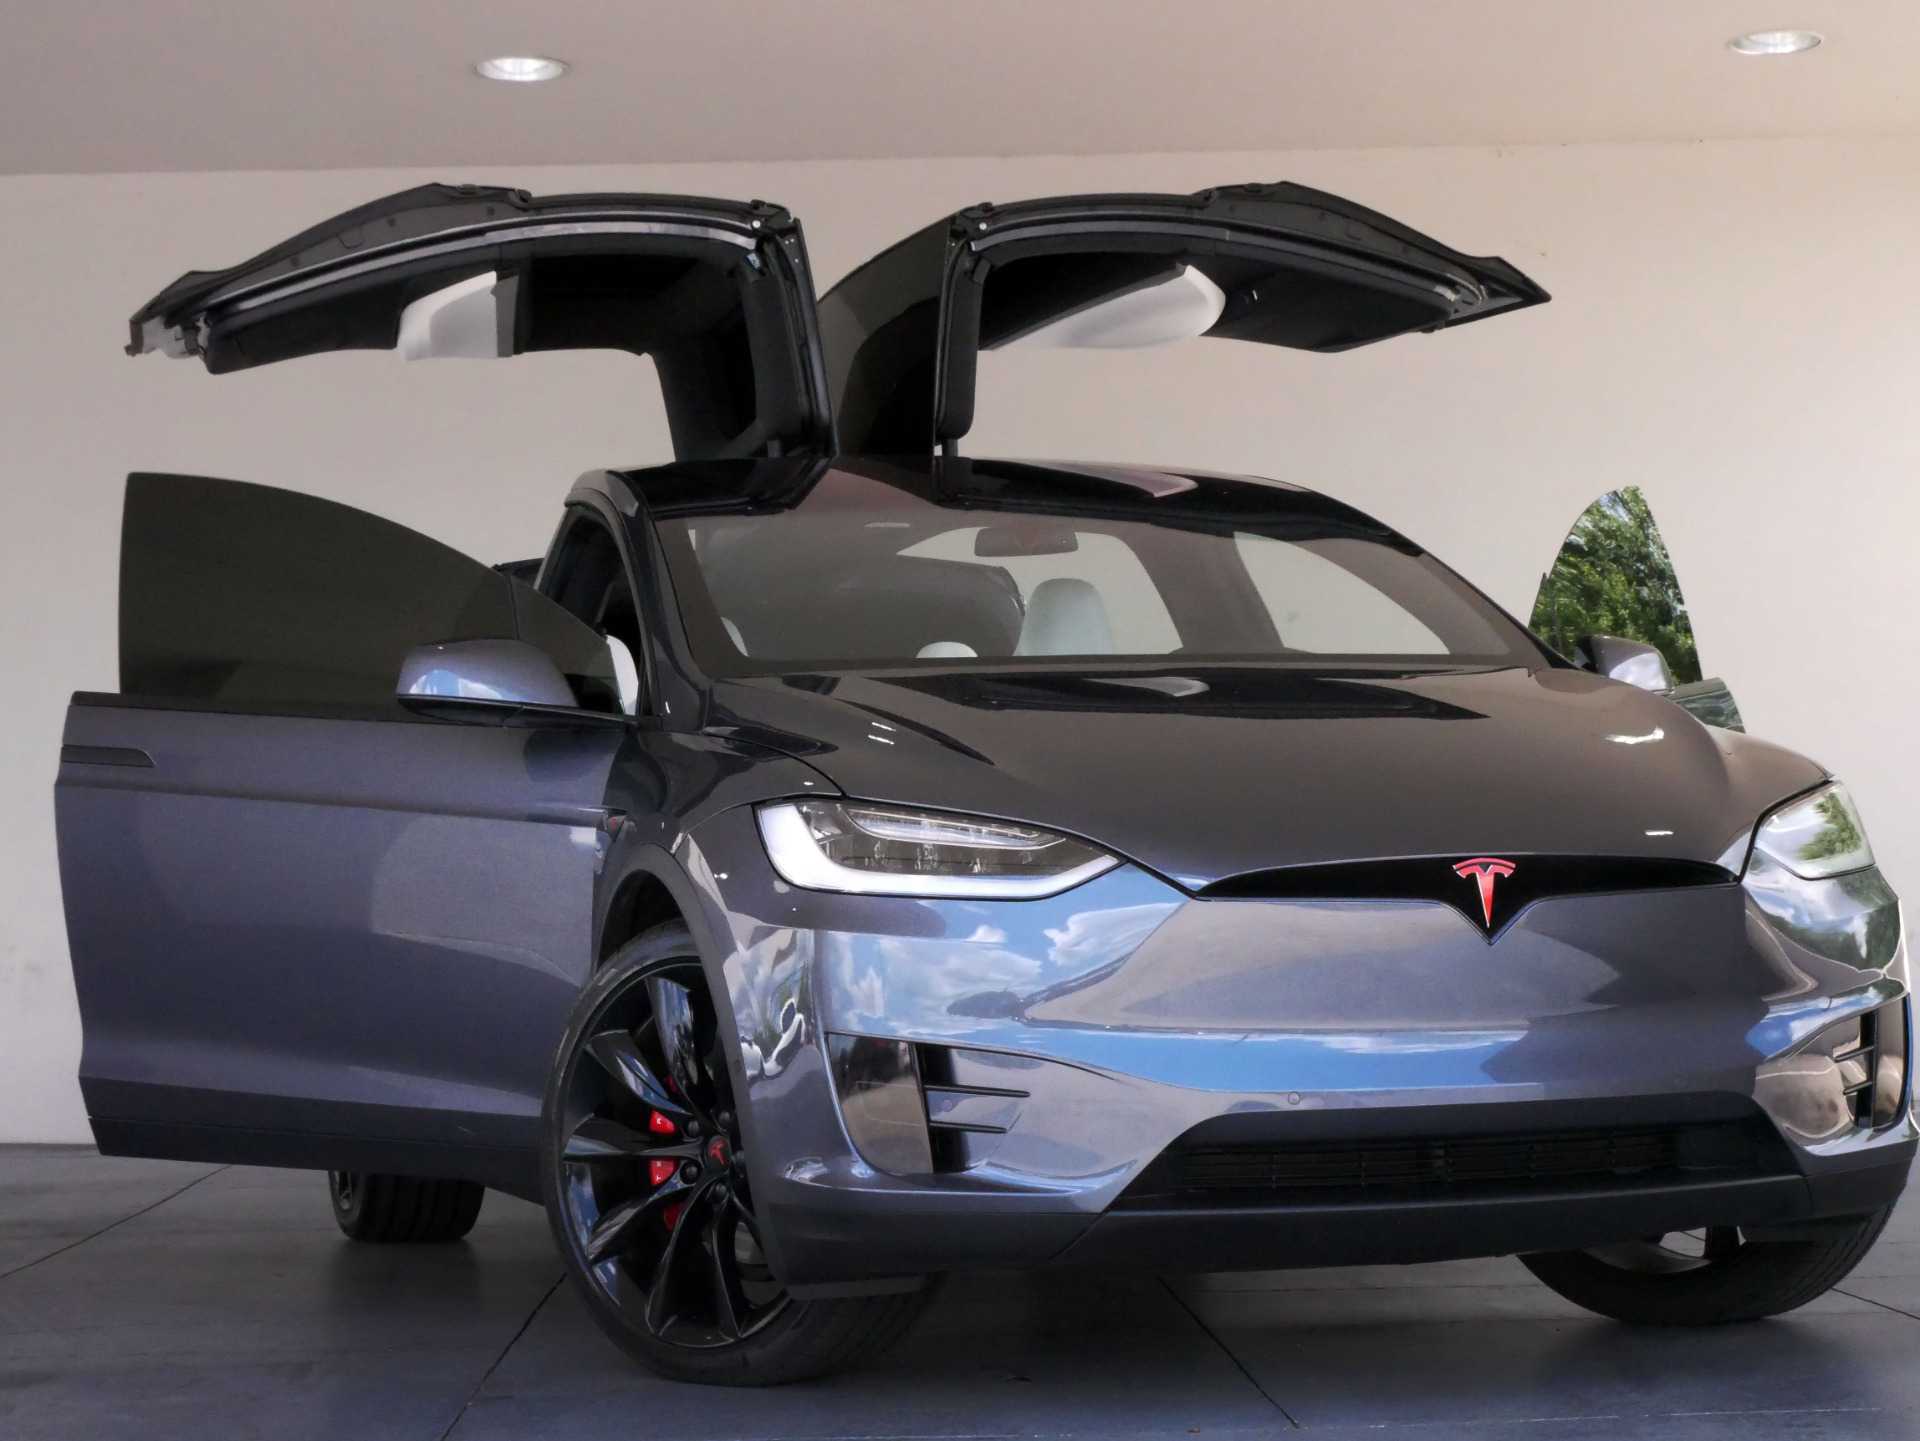 Тесла какой машина. Машина Tesla model x. Электромобиль Tesla model x. Машина Tesla model x 2018. Тесла model x 2020.